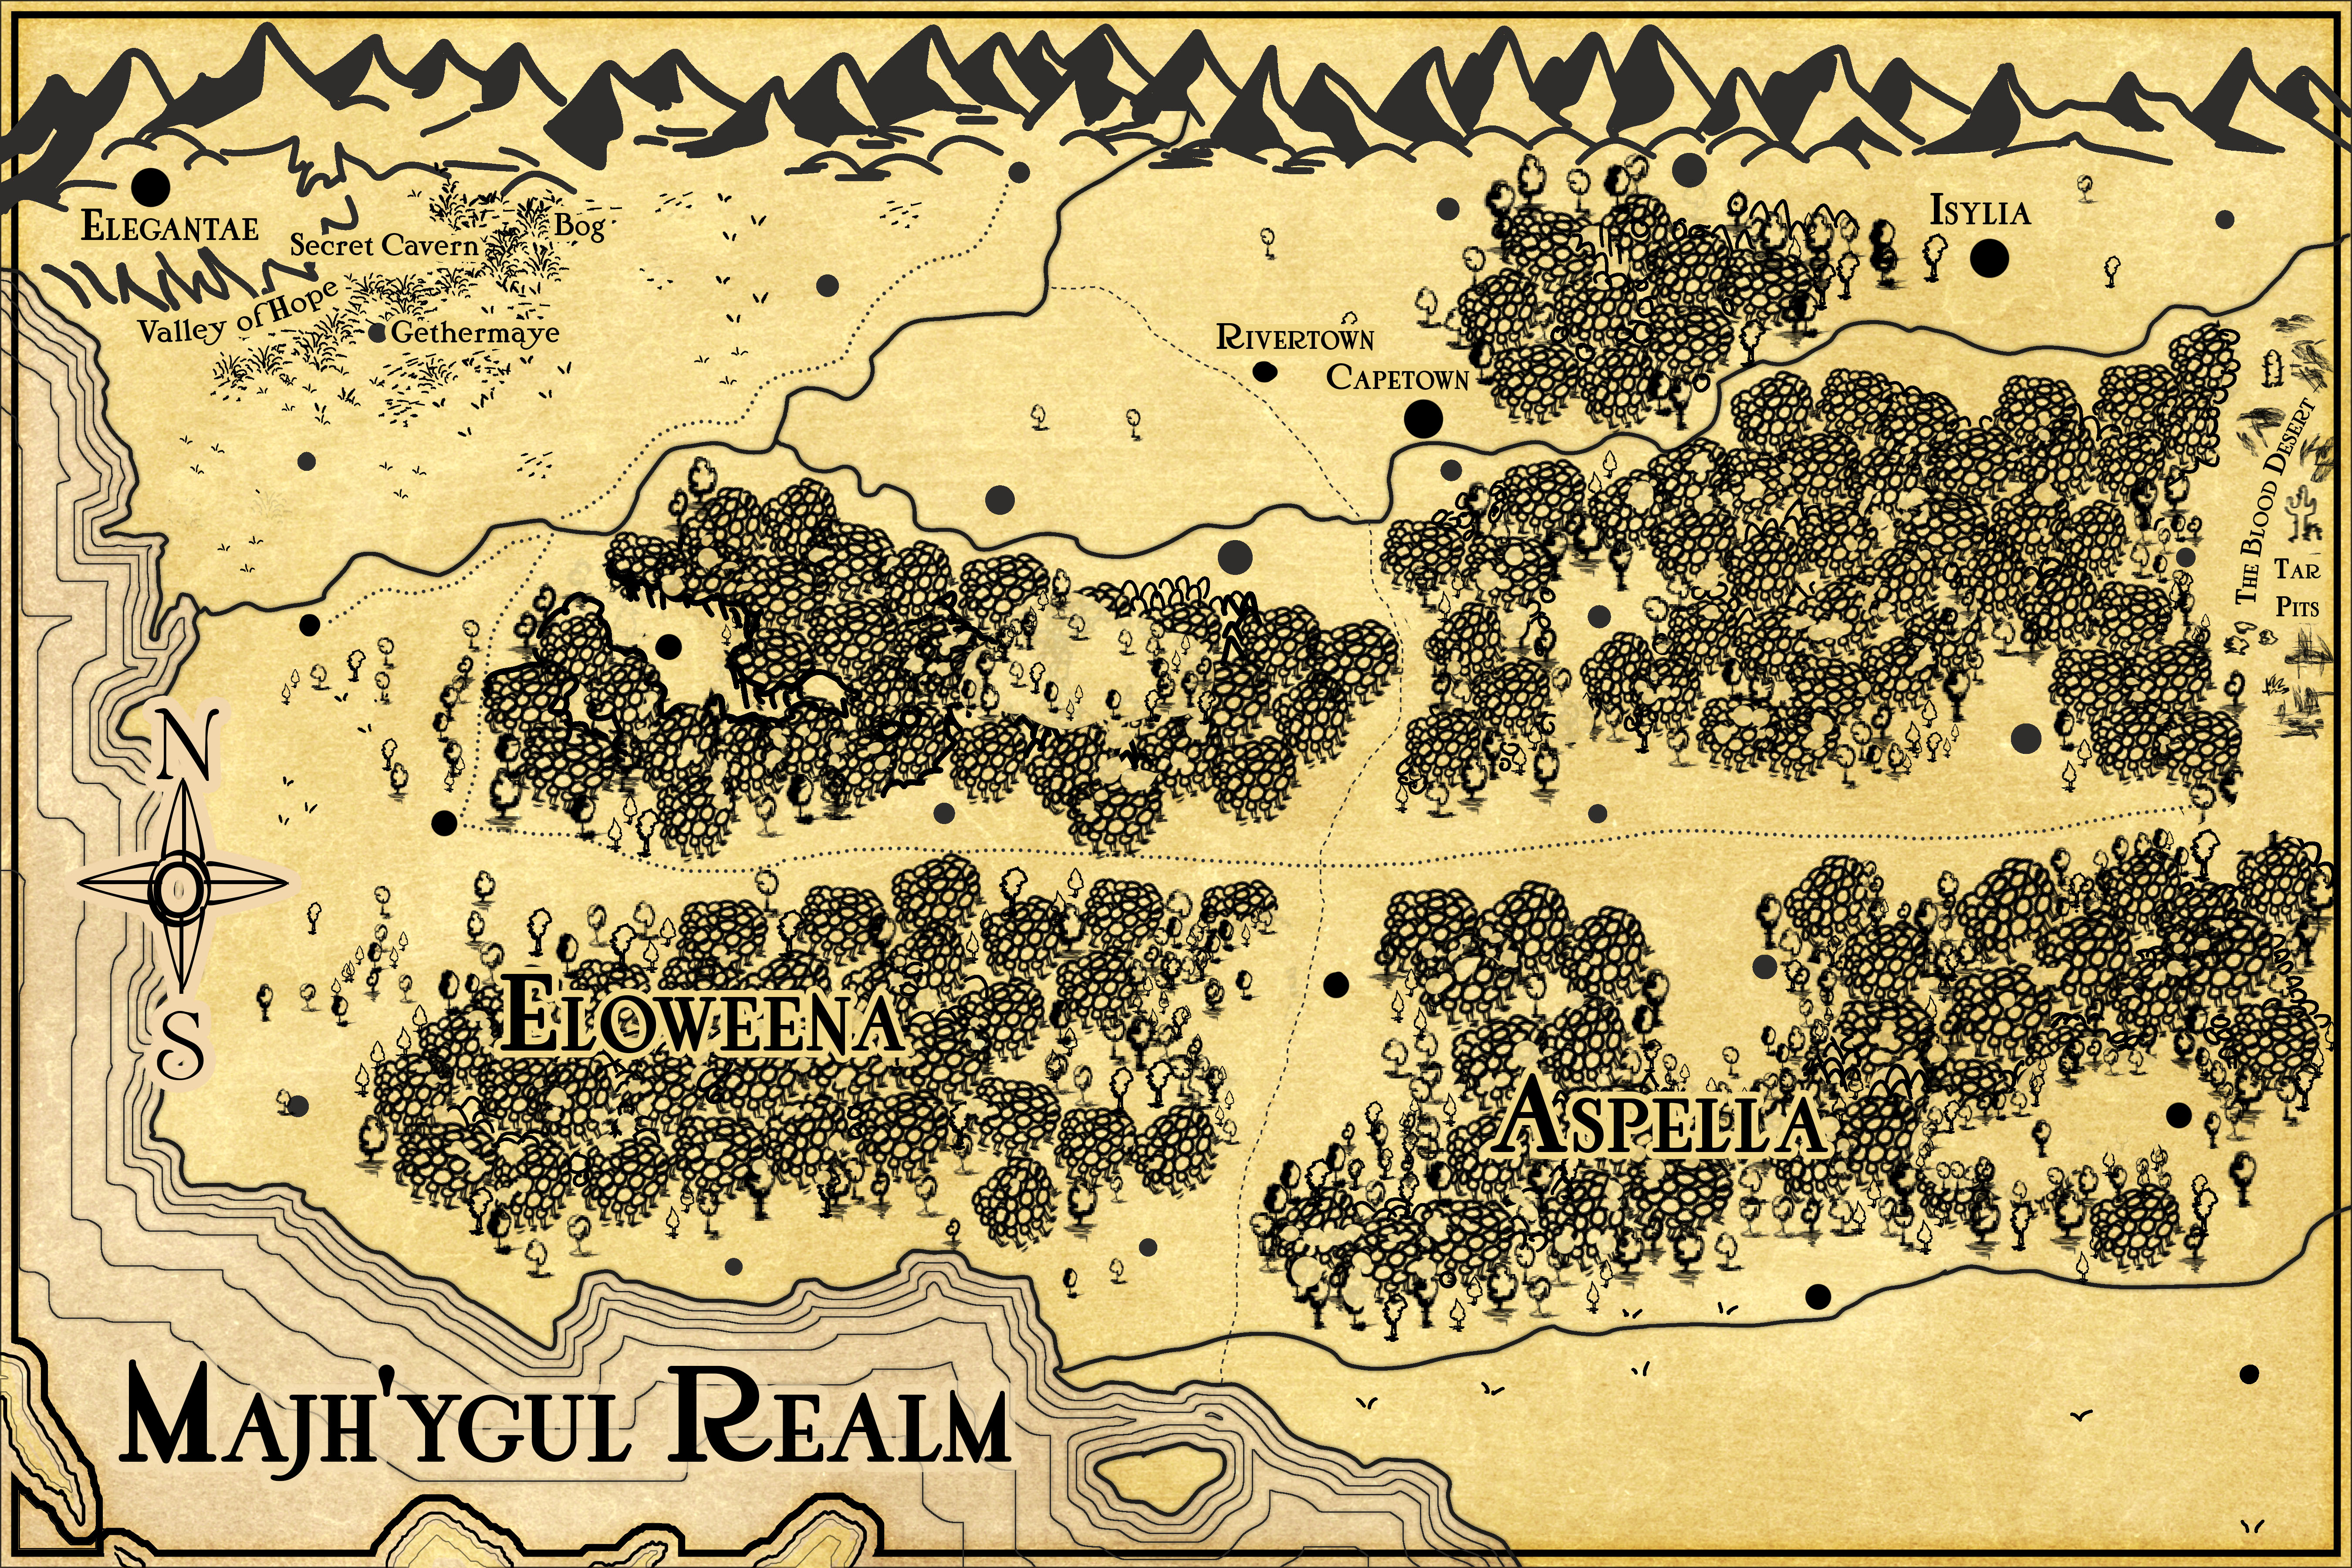 J.R.R. Tolkien Lord of the Rings inspired map insert for fantasy novel